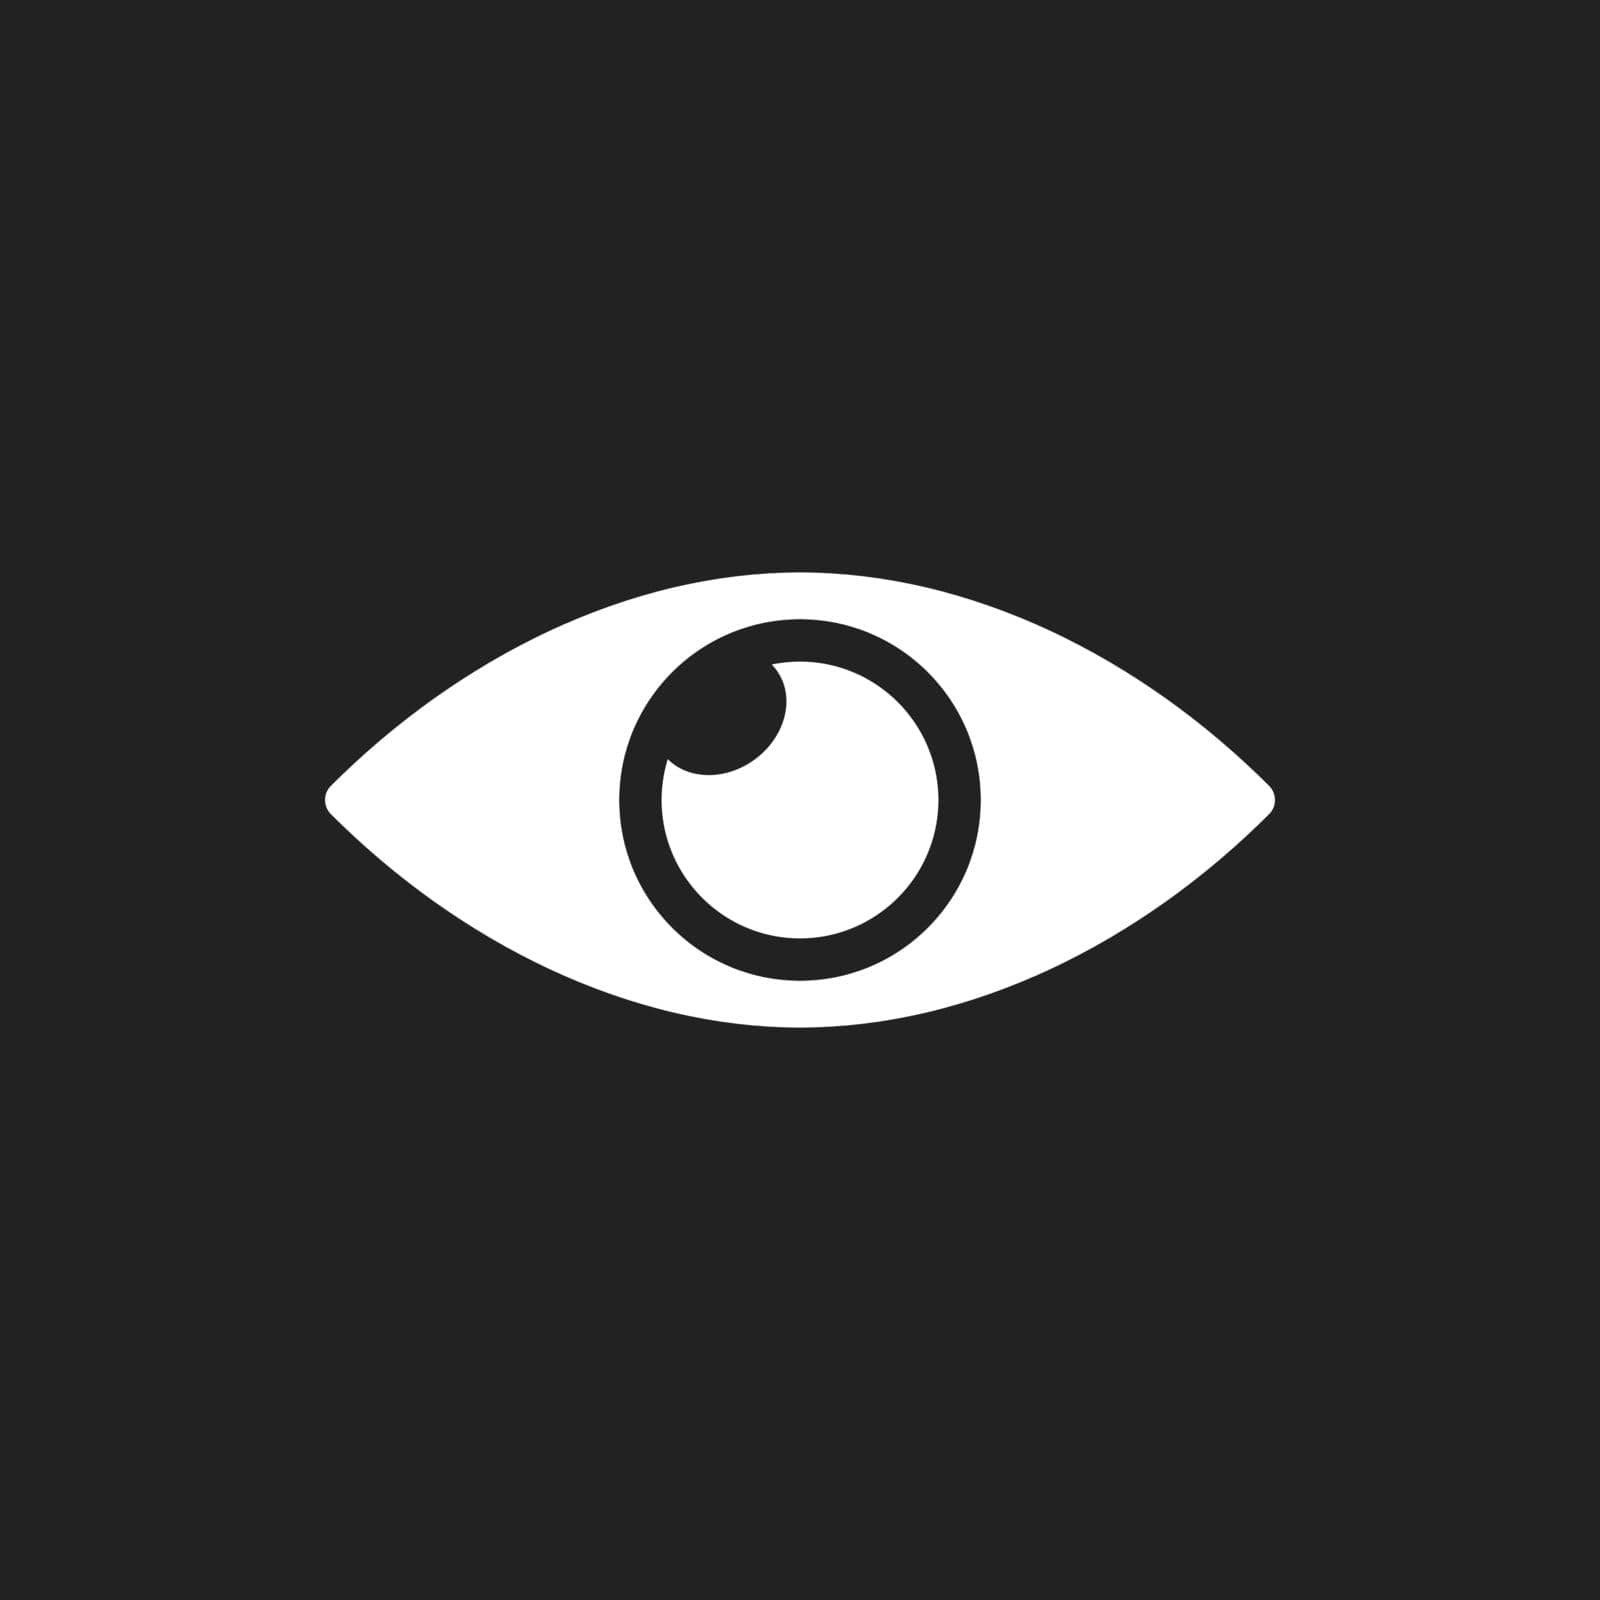 Simple eye icon vector. Eyesight pictogram in flat style. by LysenkoA